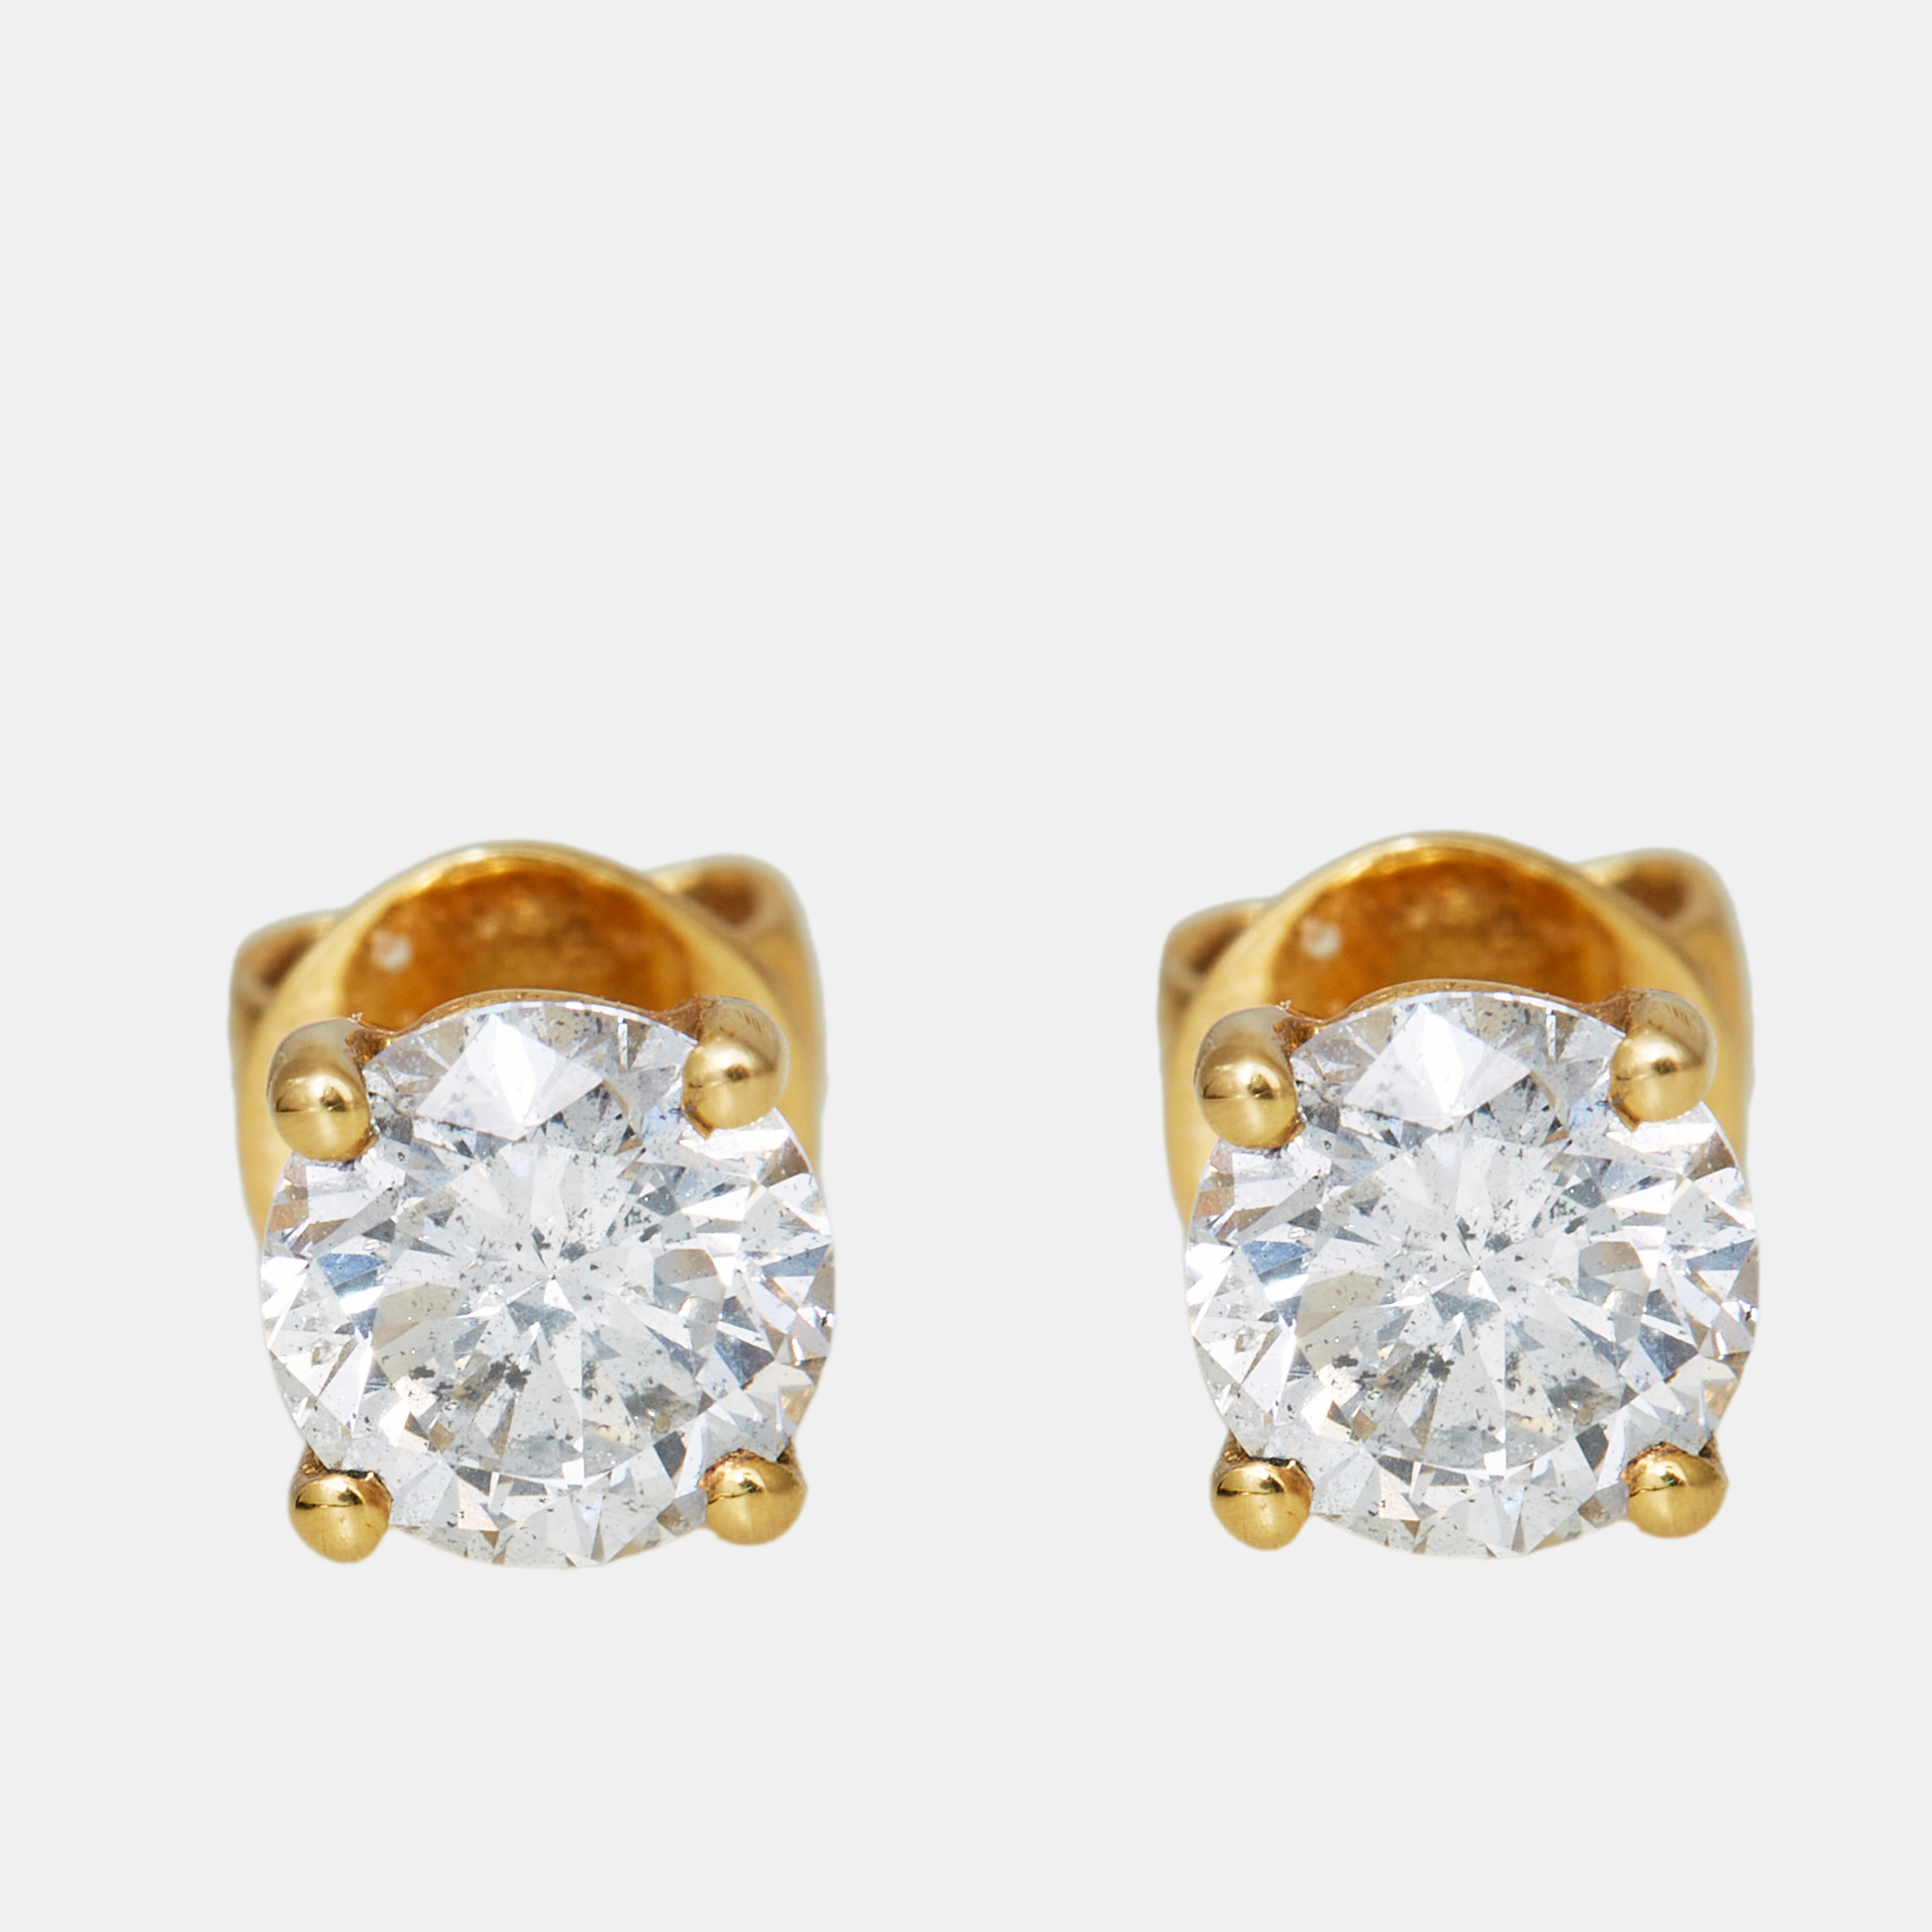 The diamond edit 18k yellow gold 1.01 ct diamond earrings